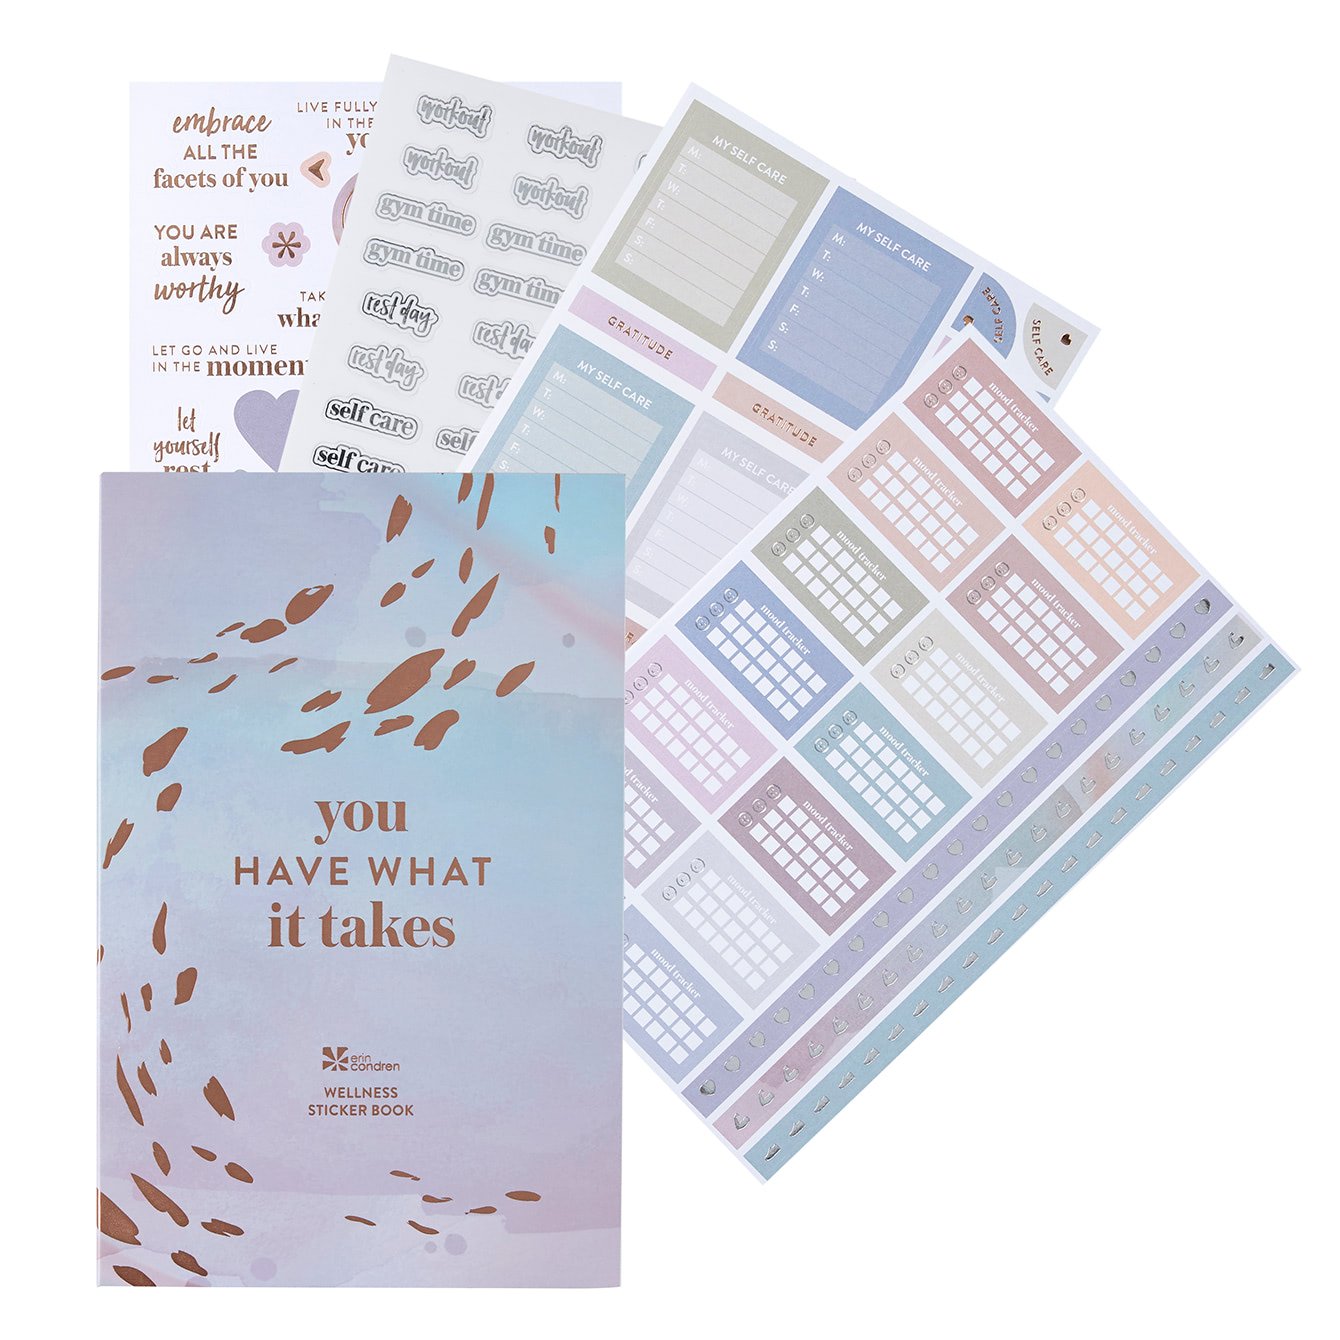 in Bloom Assorted Life Planner Sticker Pack by Erin Condren